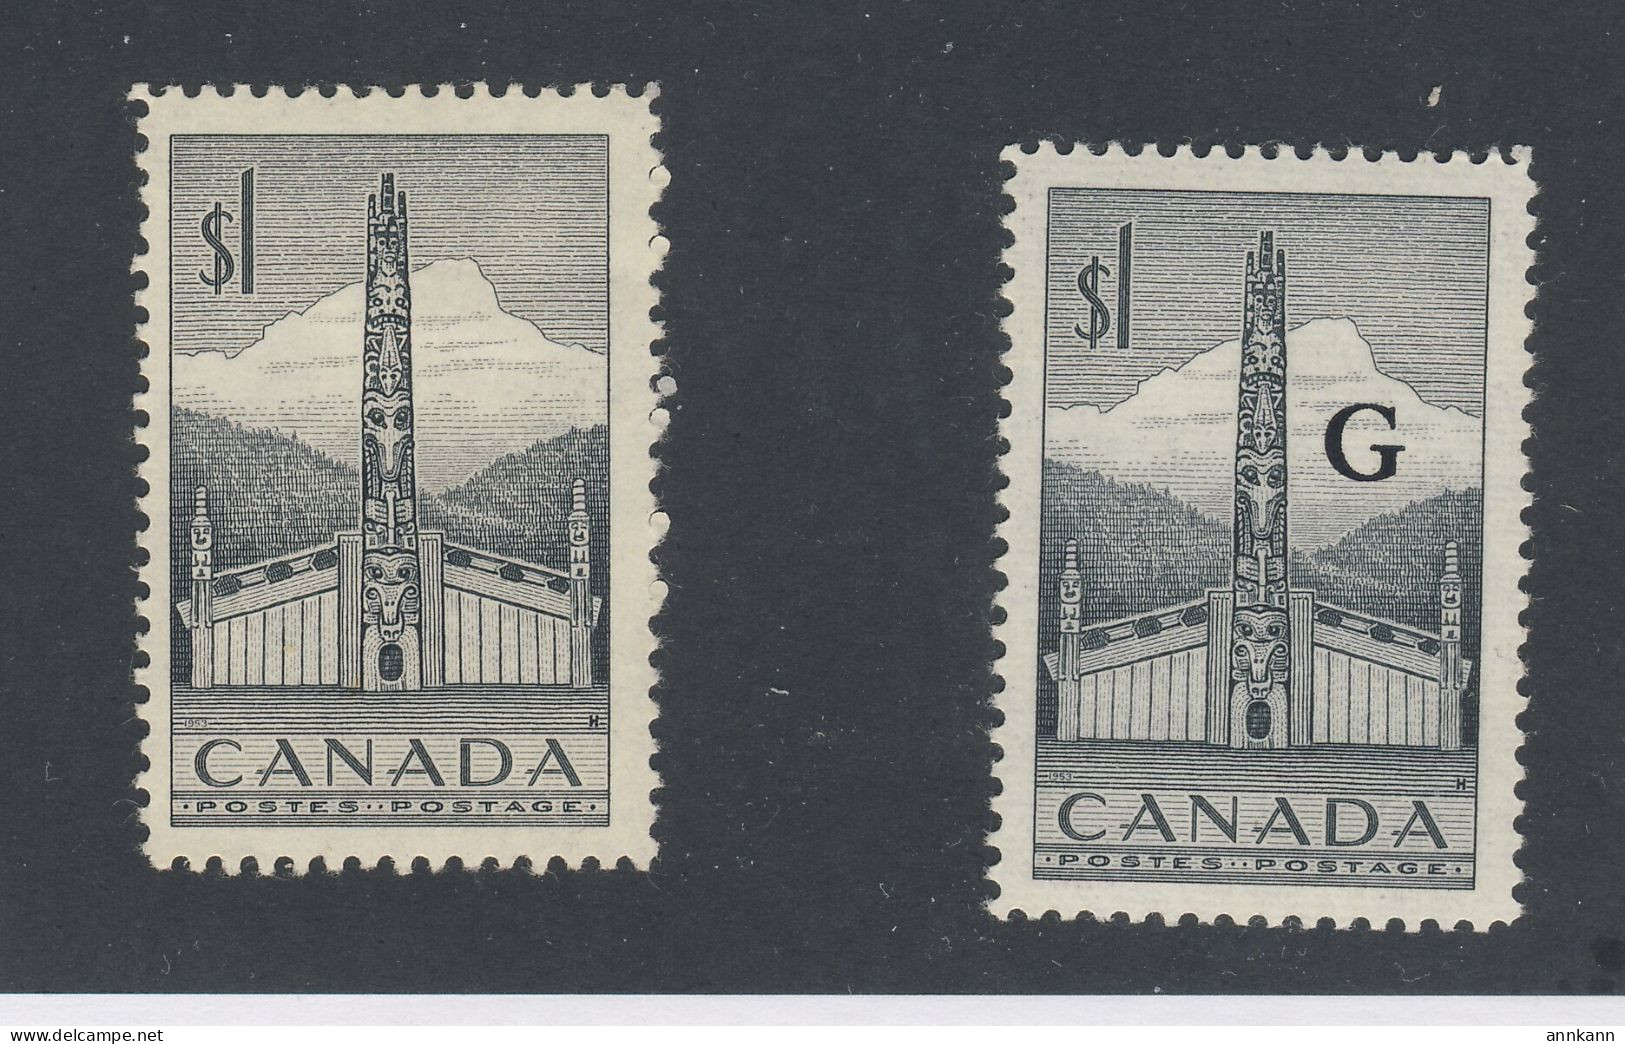 2x Canada MH Stamps #321 -$1.00 Totem & #032 -$1.00 Totem "G" GV = $17.00 - Aufdrucksausgaben